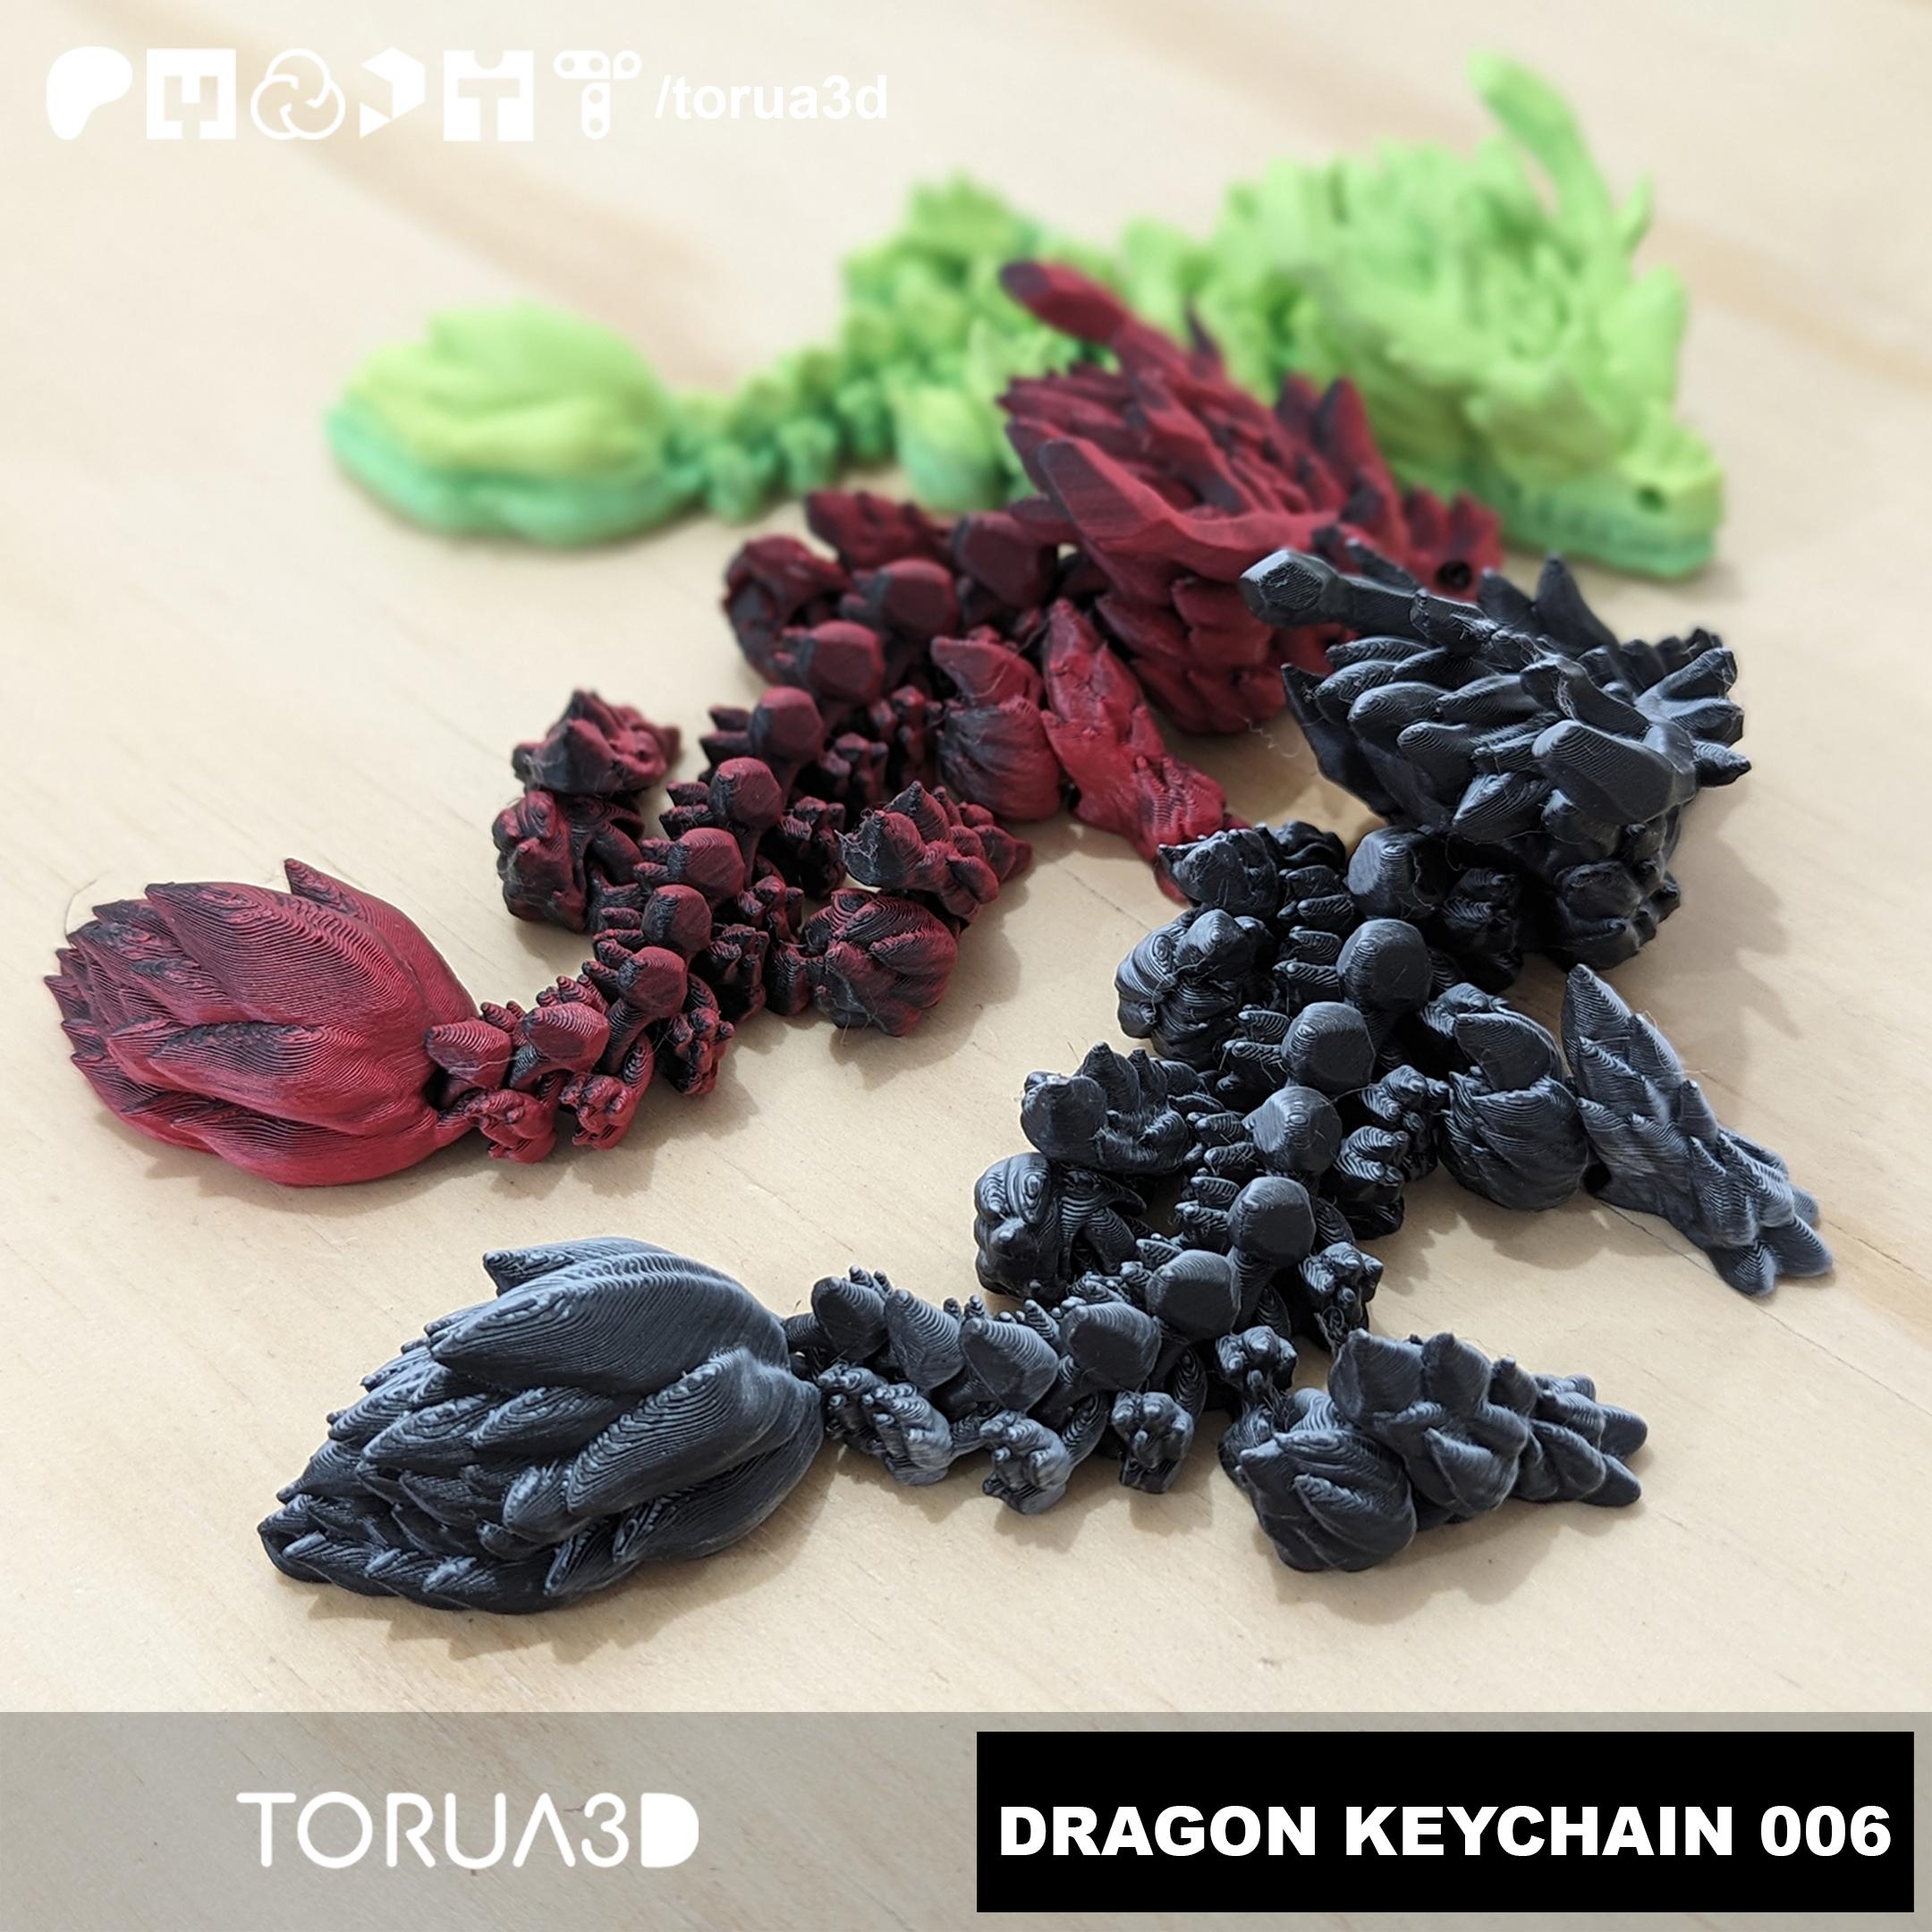 Articulated Dragon Keychain 006 by TORUA3D 3d model